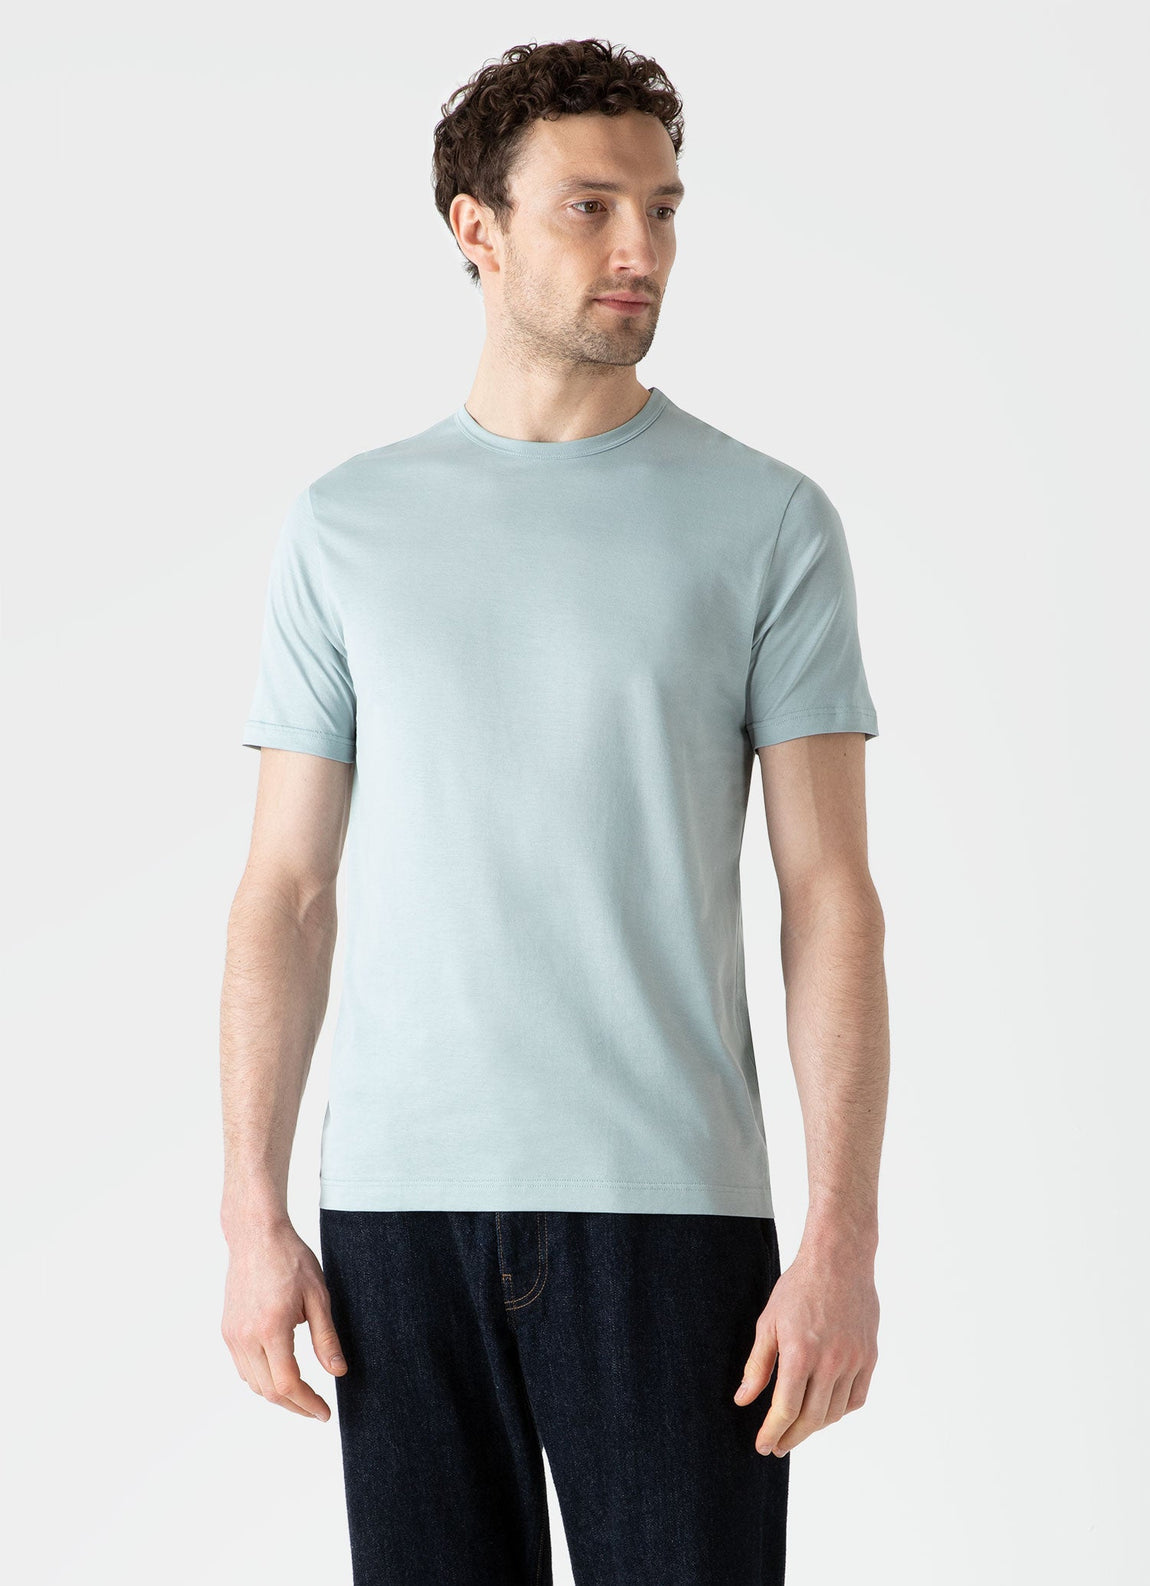 Men's Classic T-shirt in Blue Sage